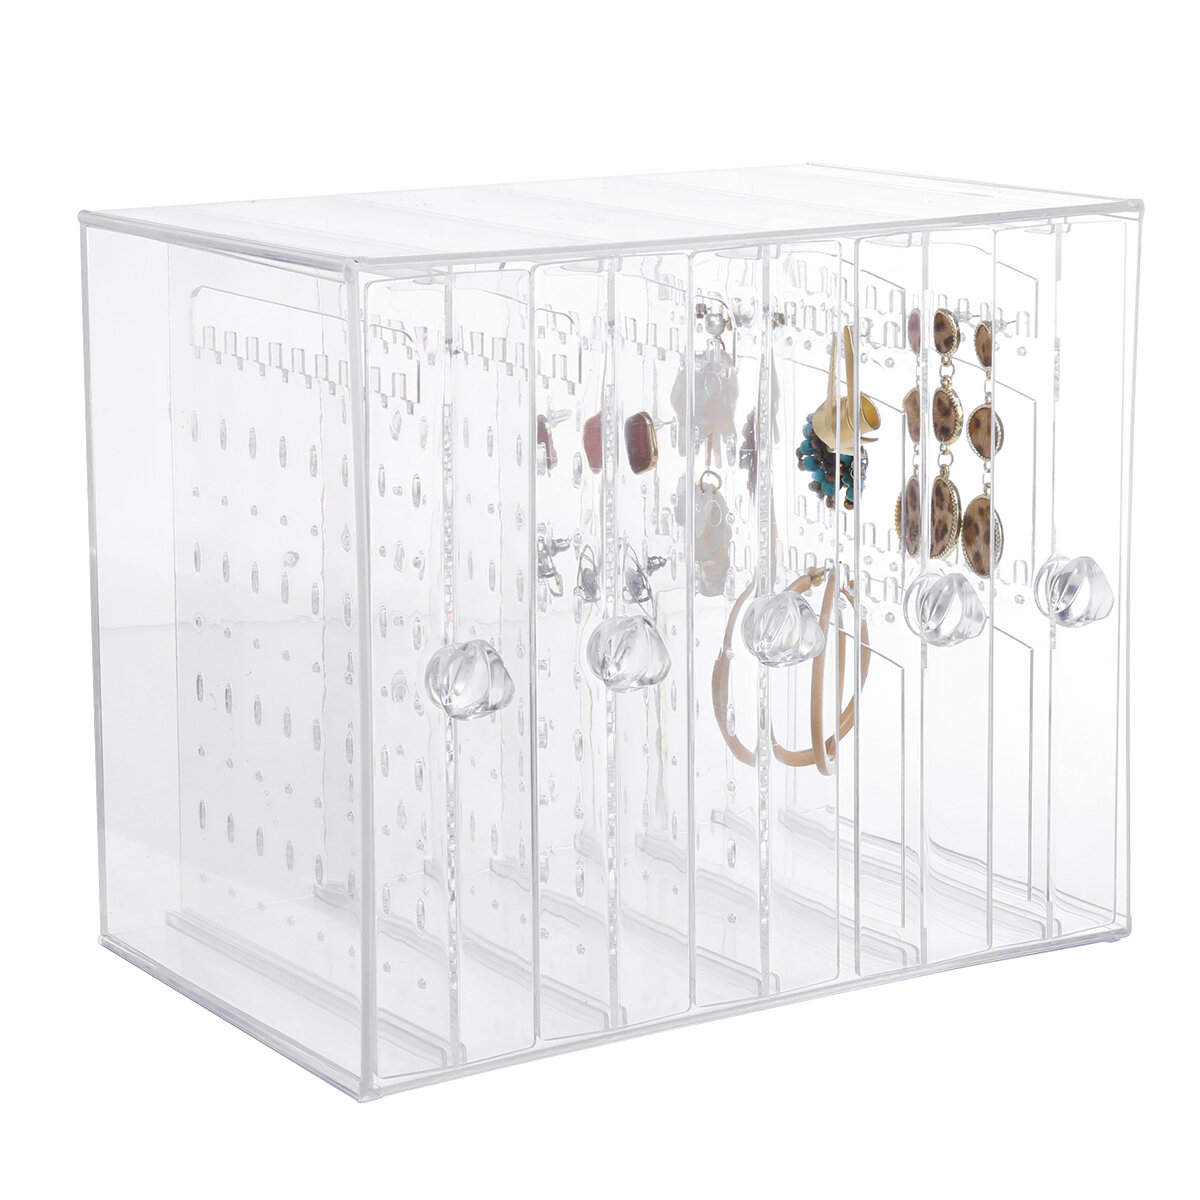 Dustproof Transparent Acrylic Earrings Jewelry Storage Box Desktop Display Stand Rack Tray Organizer COD